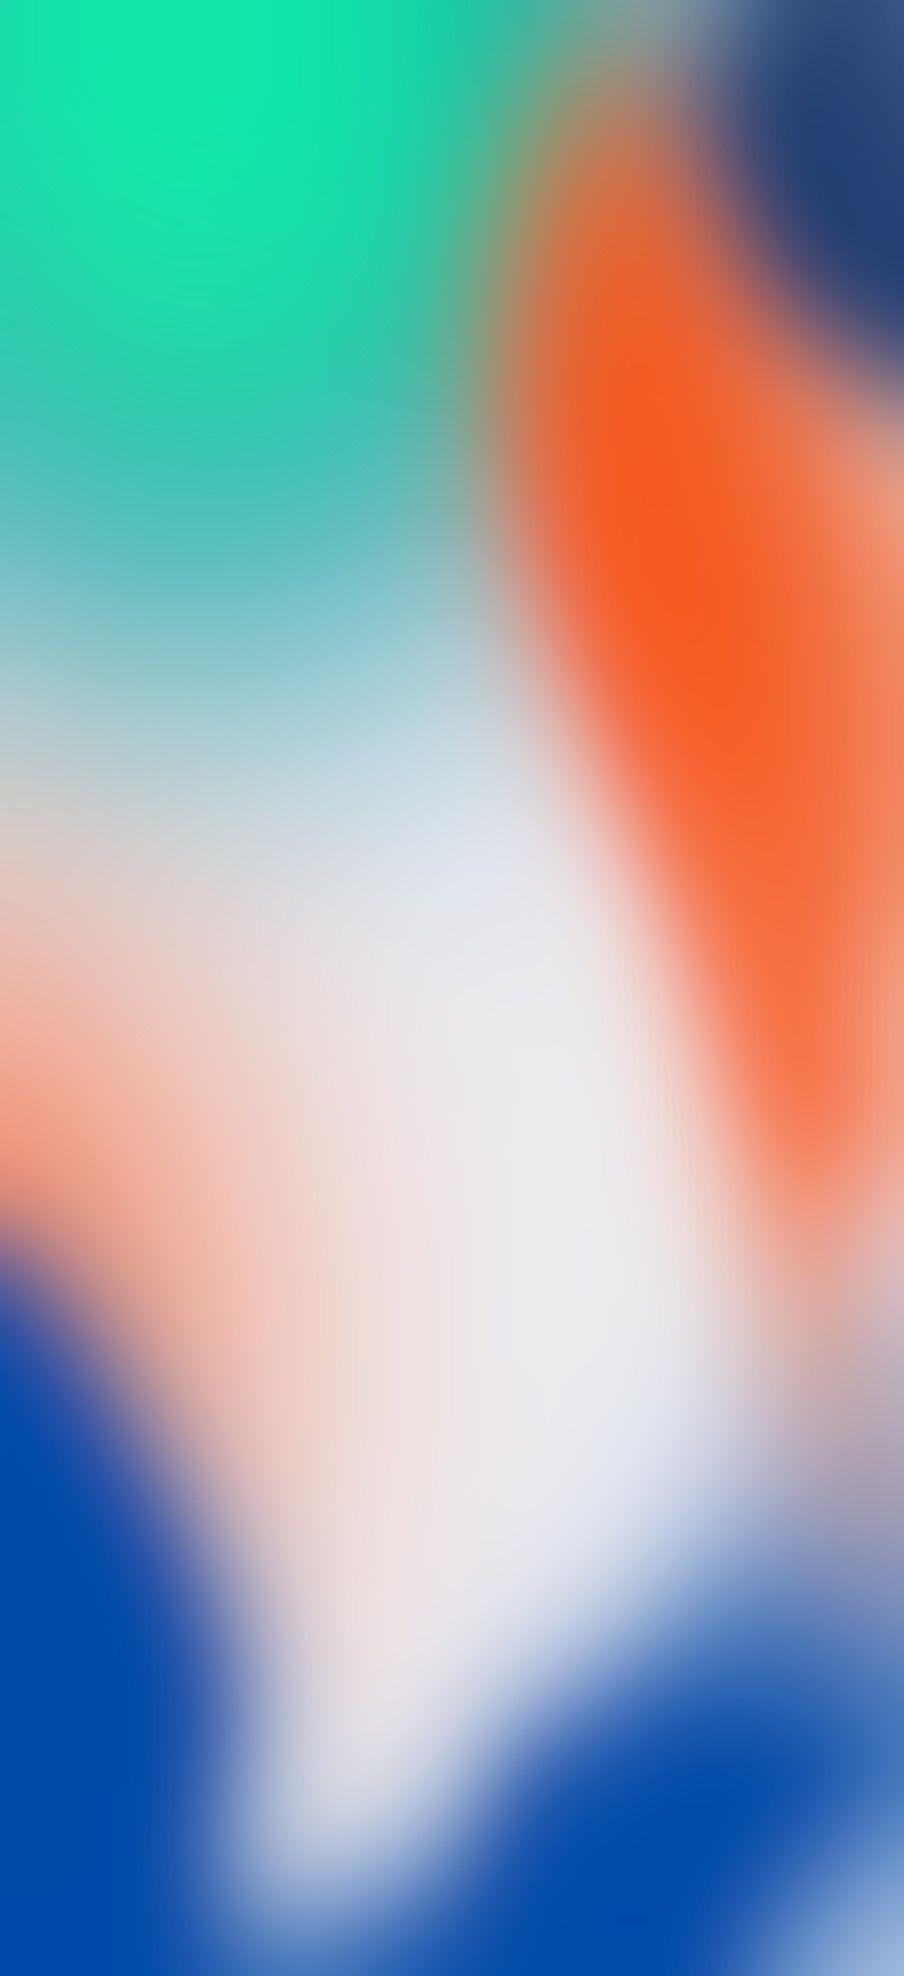 iOS 11, iPhone X, orange, green, blue, Stock, abstract